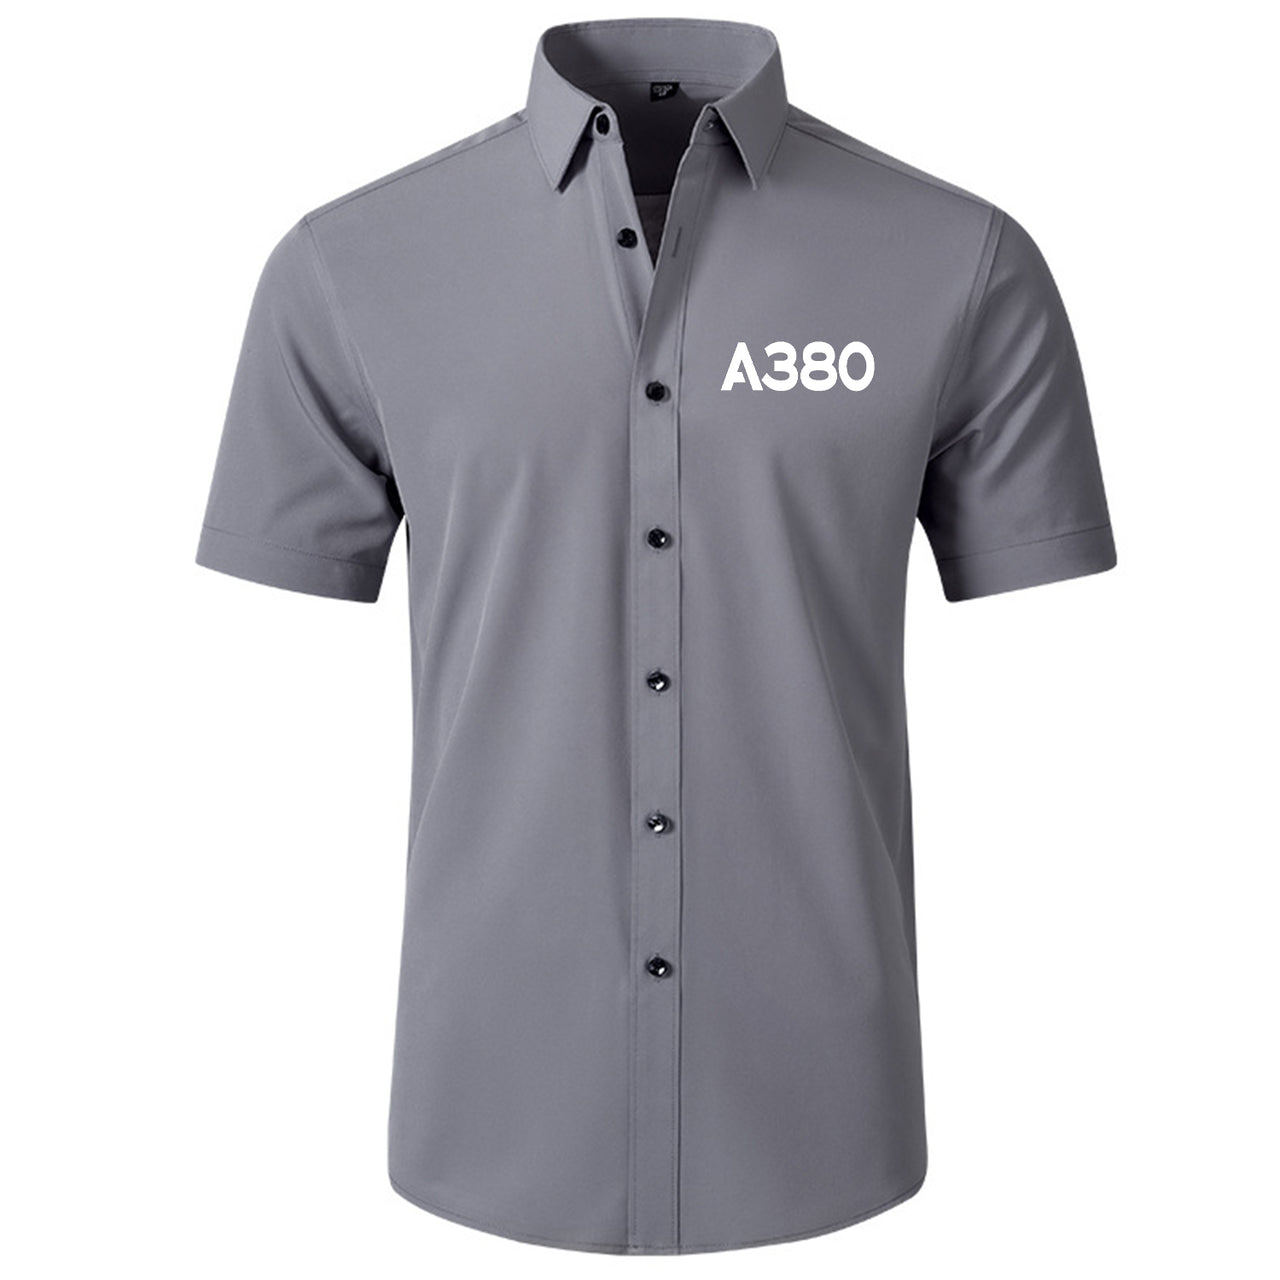 A380 Flat Text Designed Short Sleeve Shirts